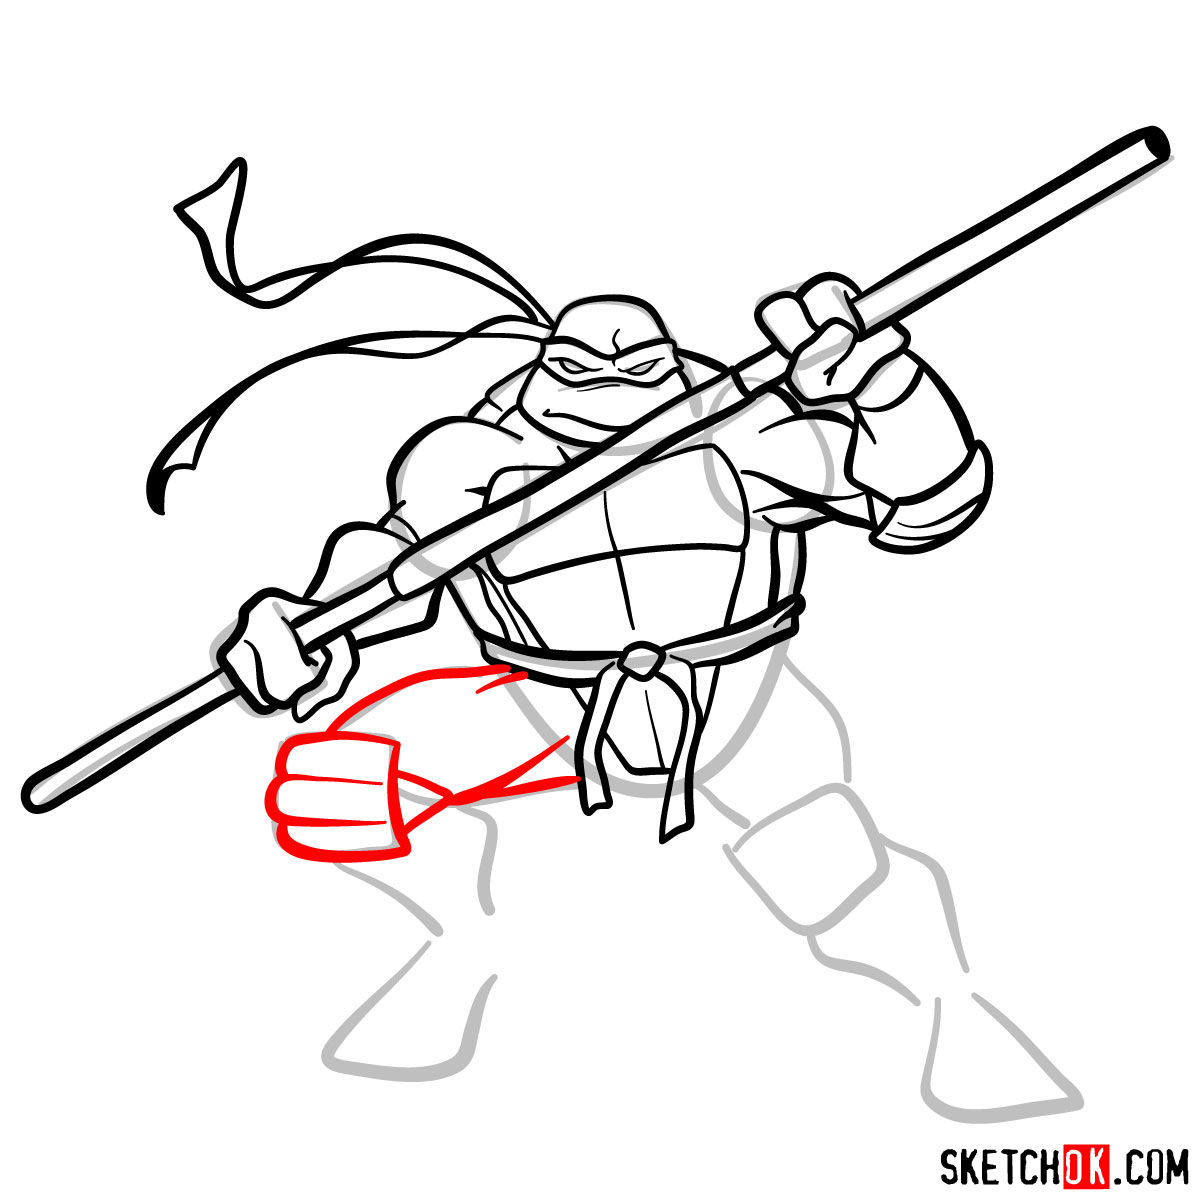 How to draw Donatello ninja turtle - step 11